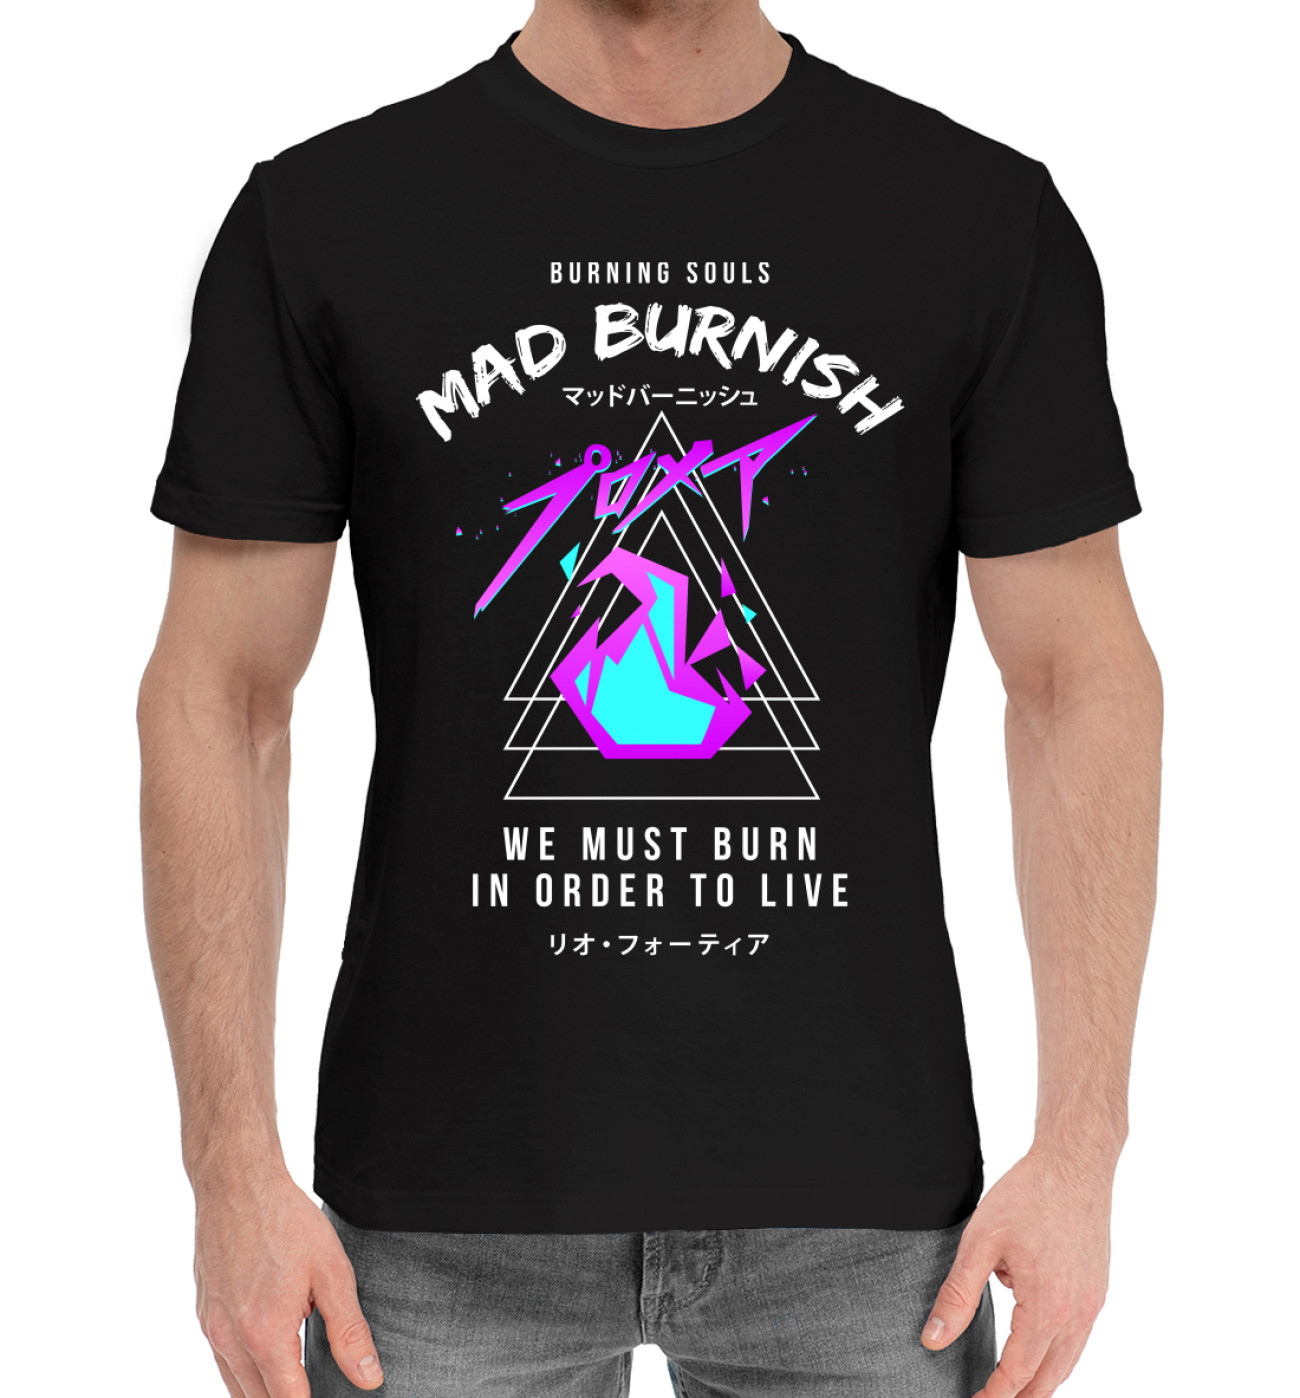 Мужская Хлопковая футболка Promare, Mad Burnish, артикул: ANR-457435-hfu-2